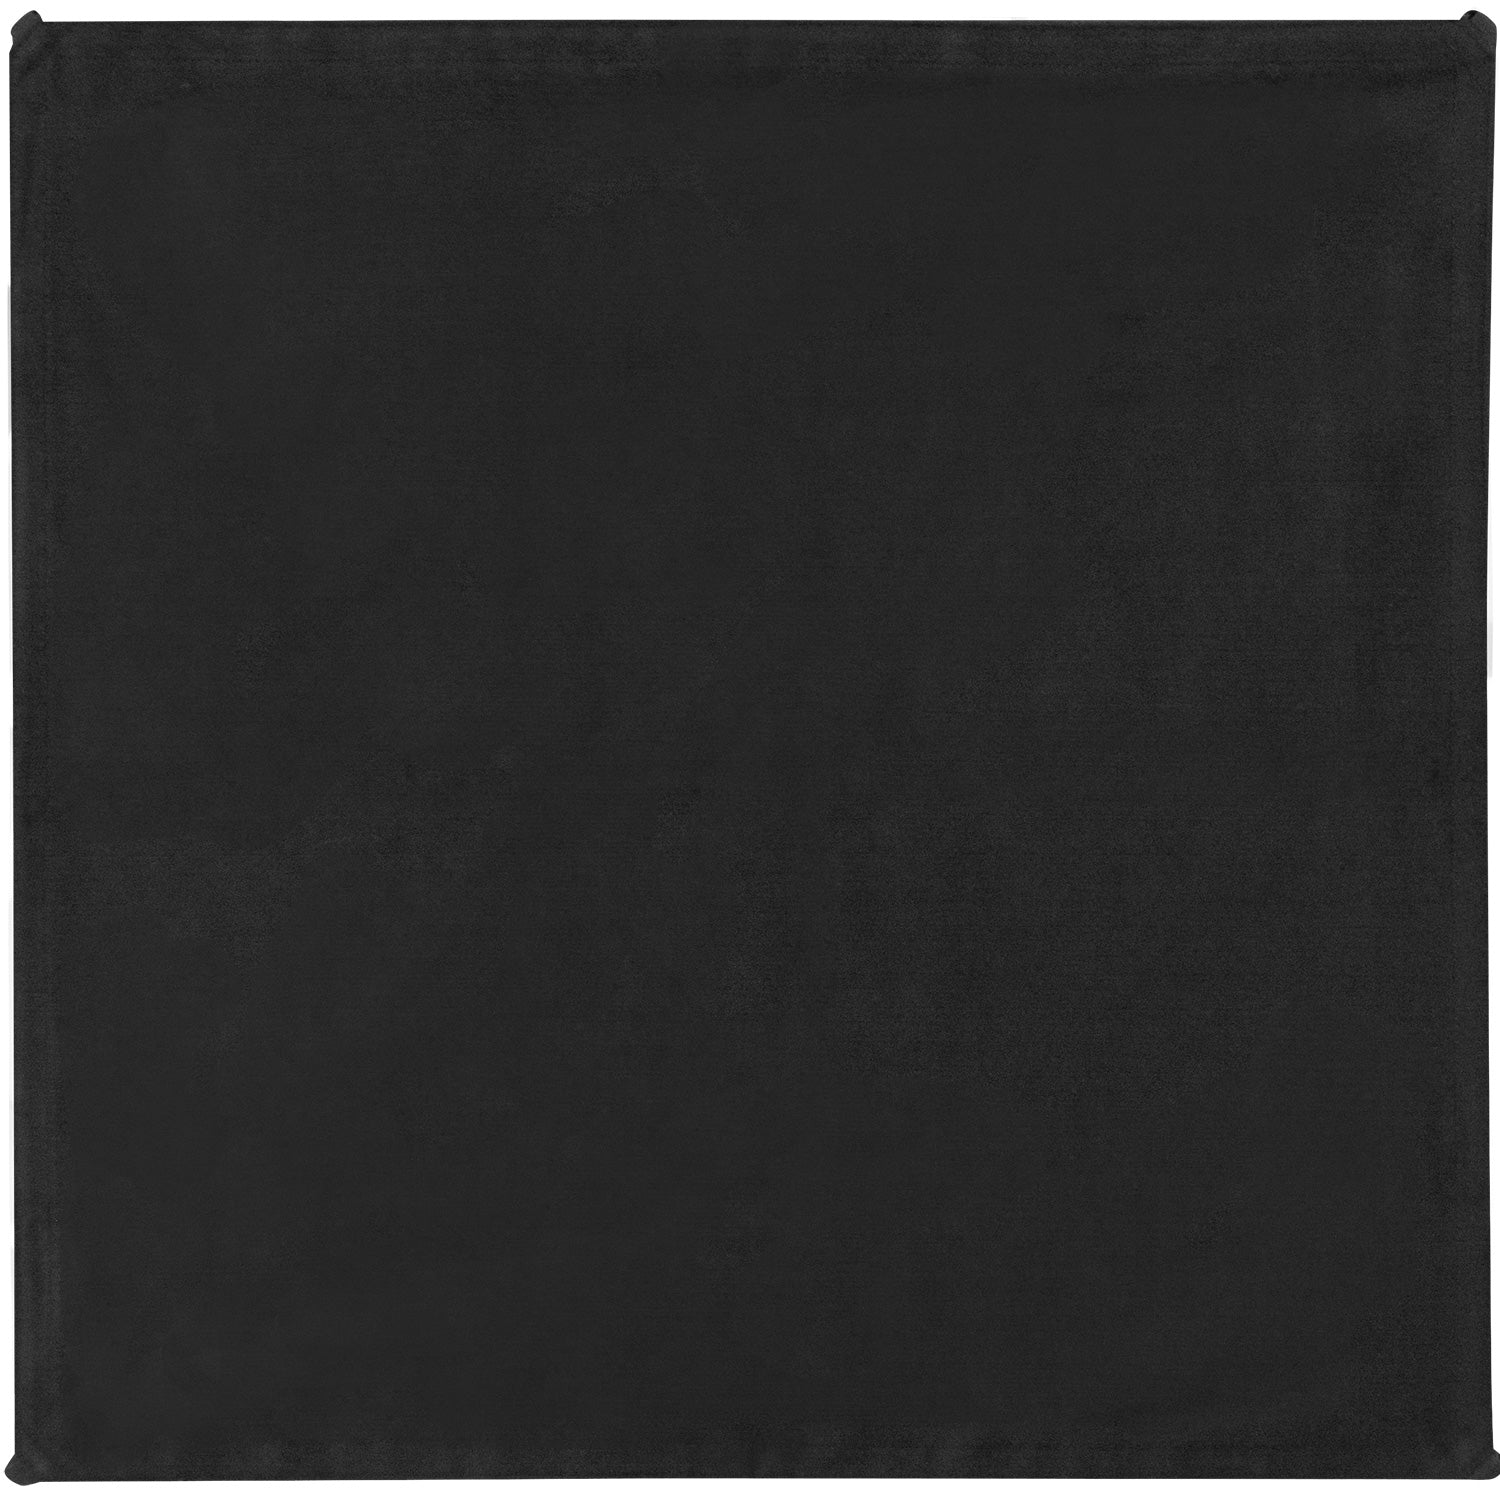 Scrim Jim Cine 2' x 2' Solid Black Block Fabric